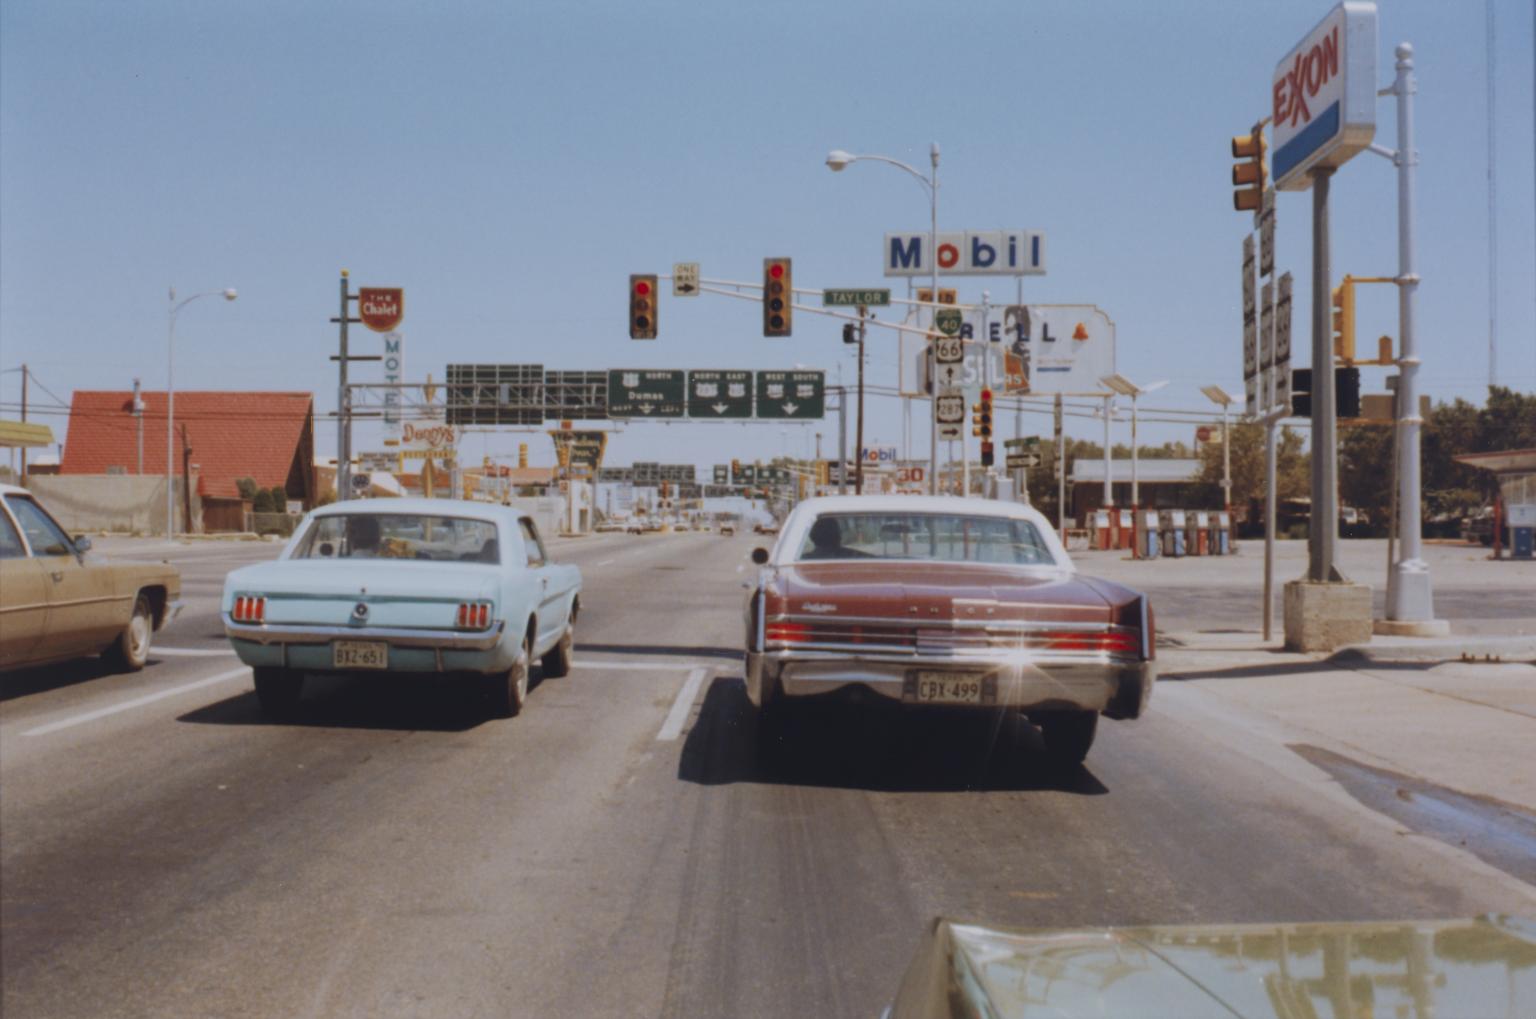 Amarillo, Texas, August 1973', Stephen Shore, 1973, printed 2005 